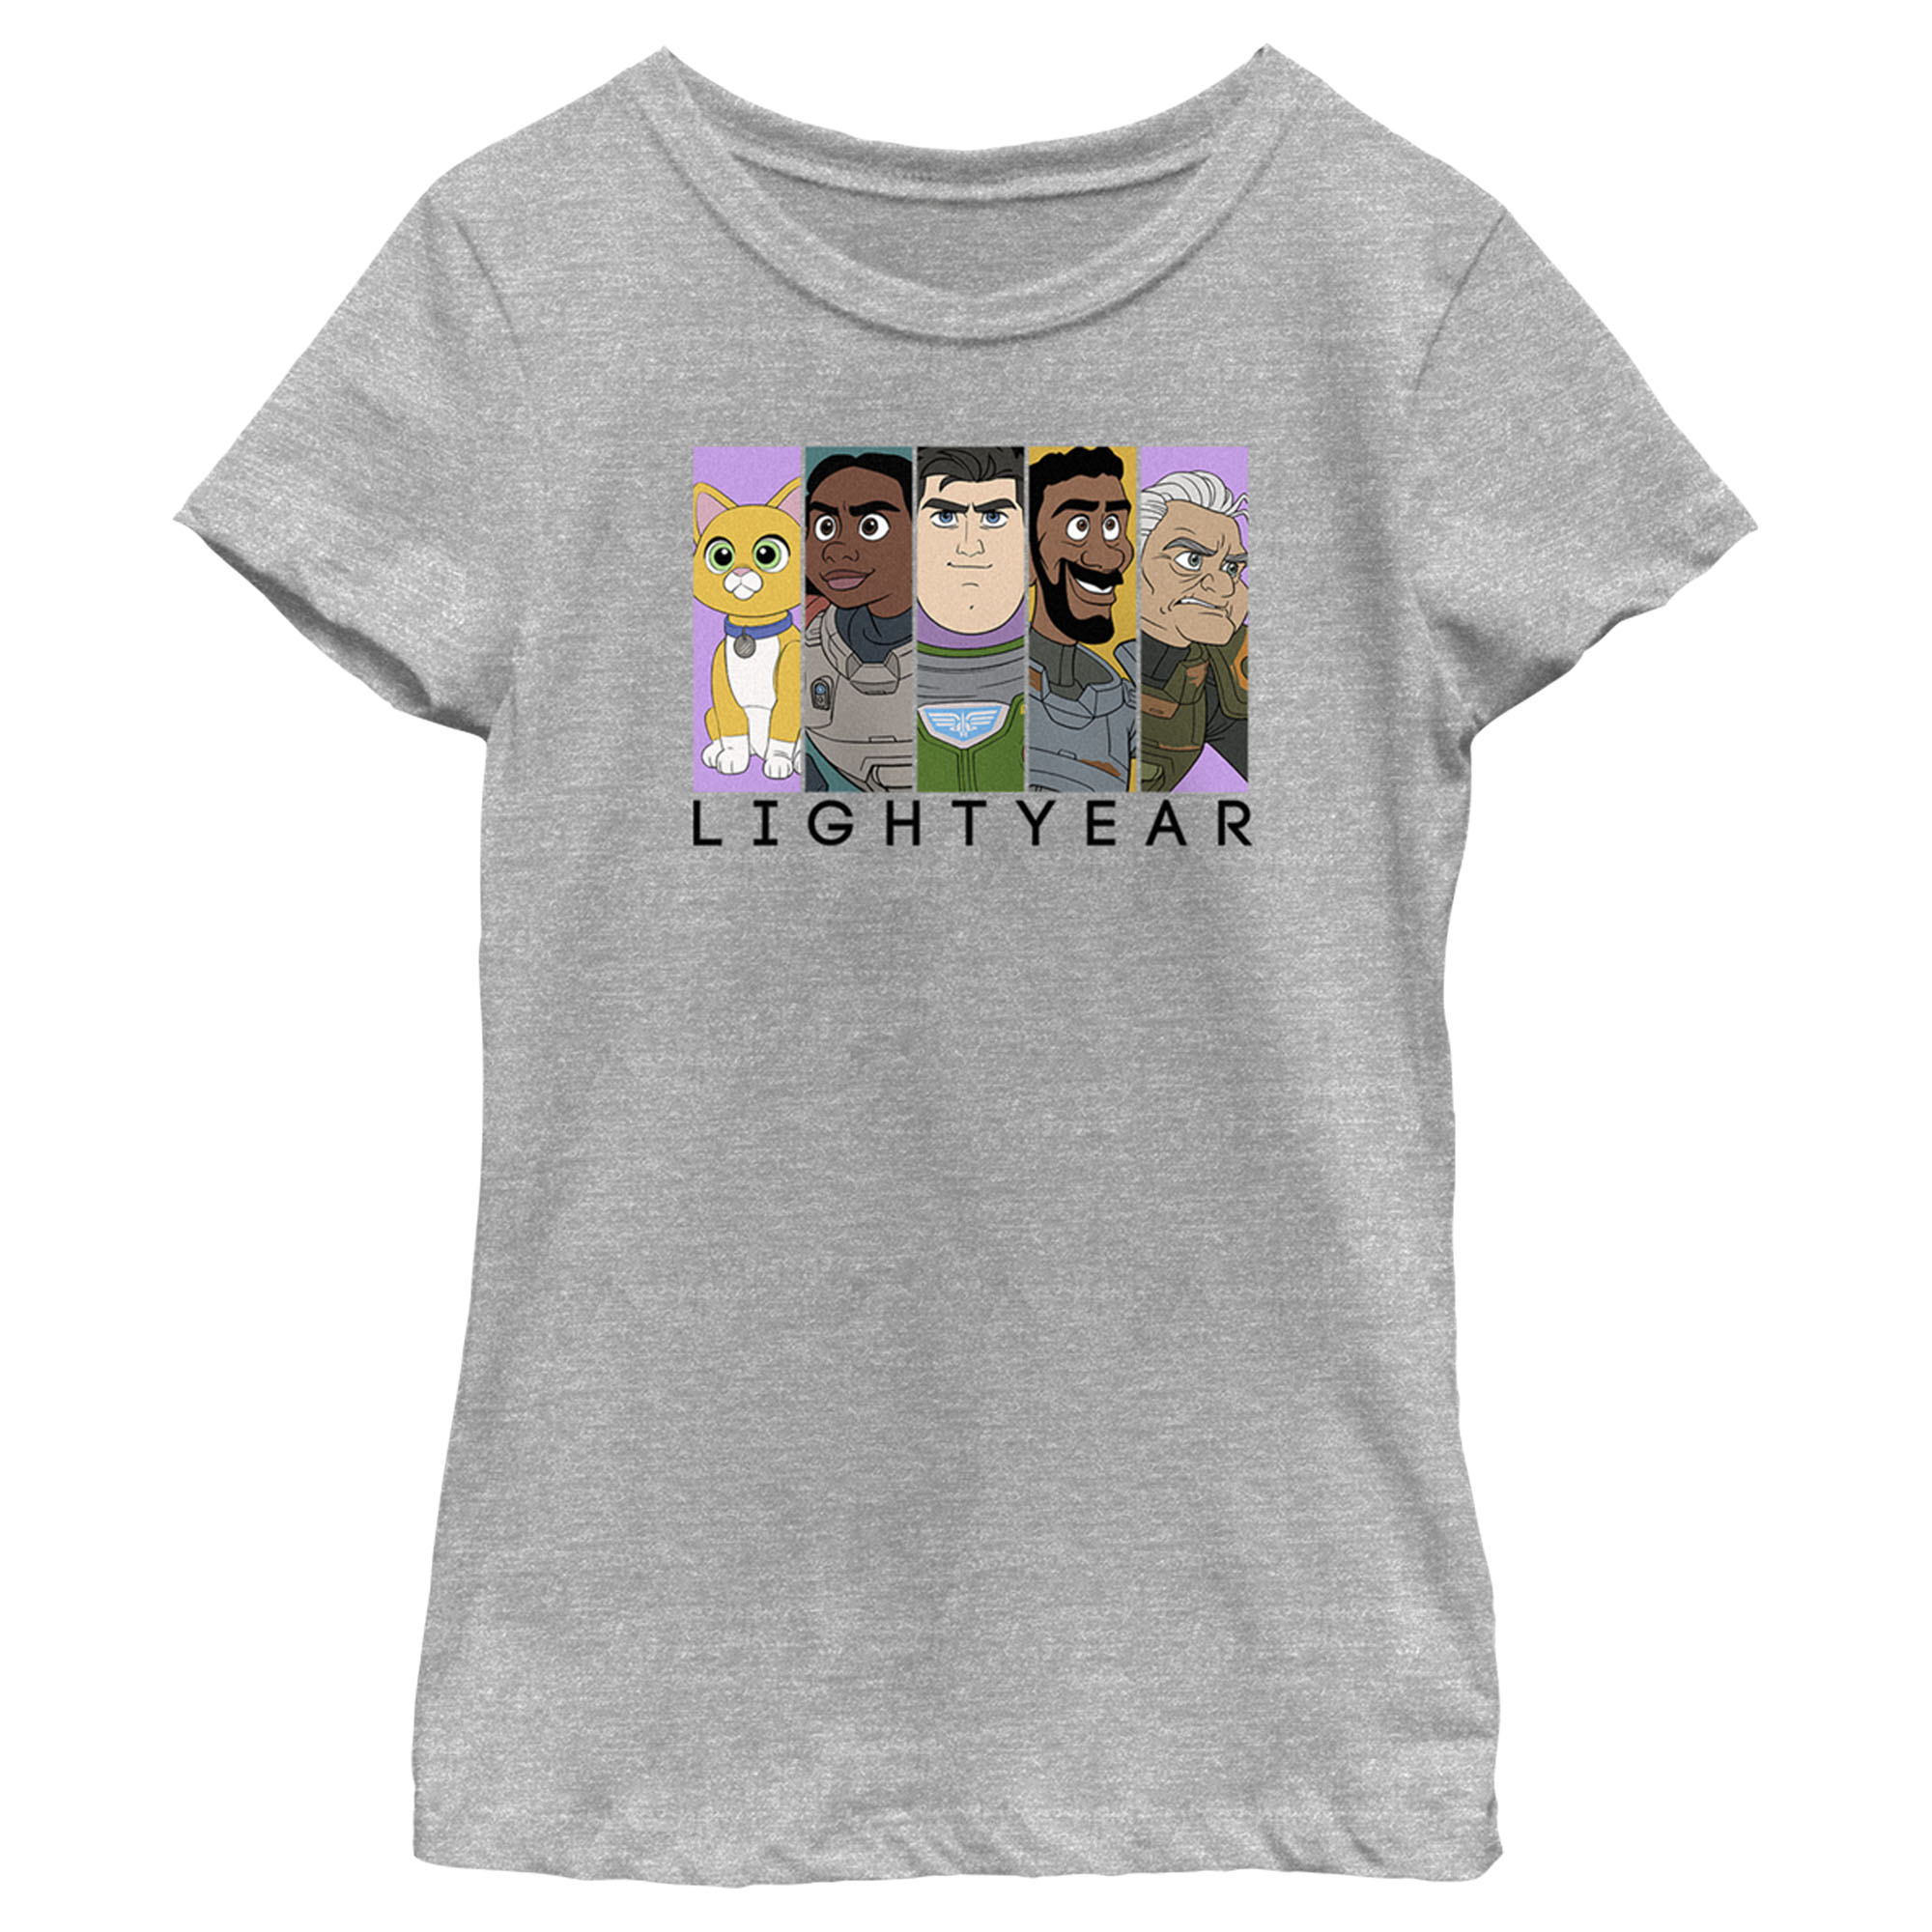 Lightyear Girl's Lightyear Group Panels  Graphic T-Shirt